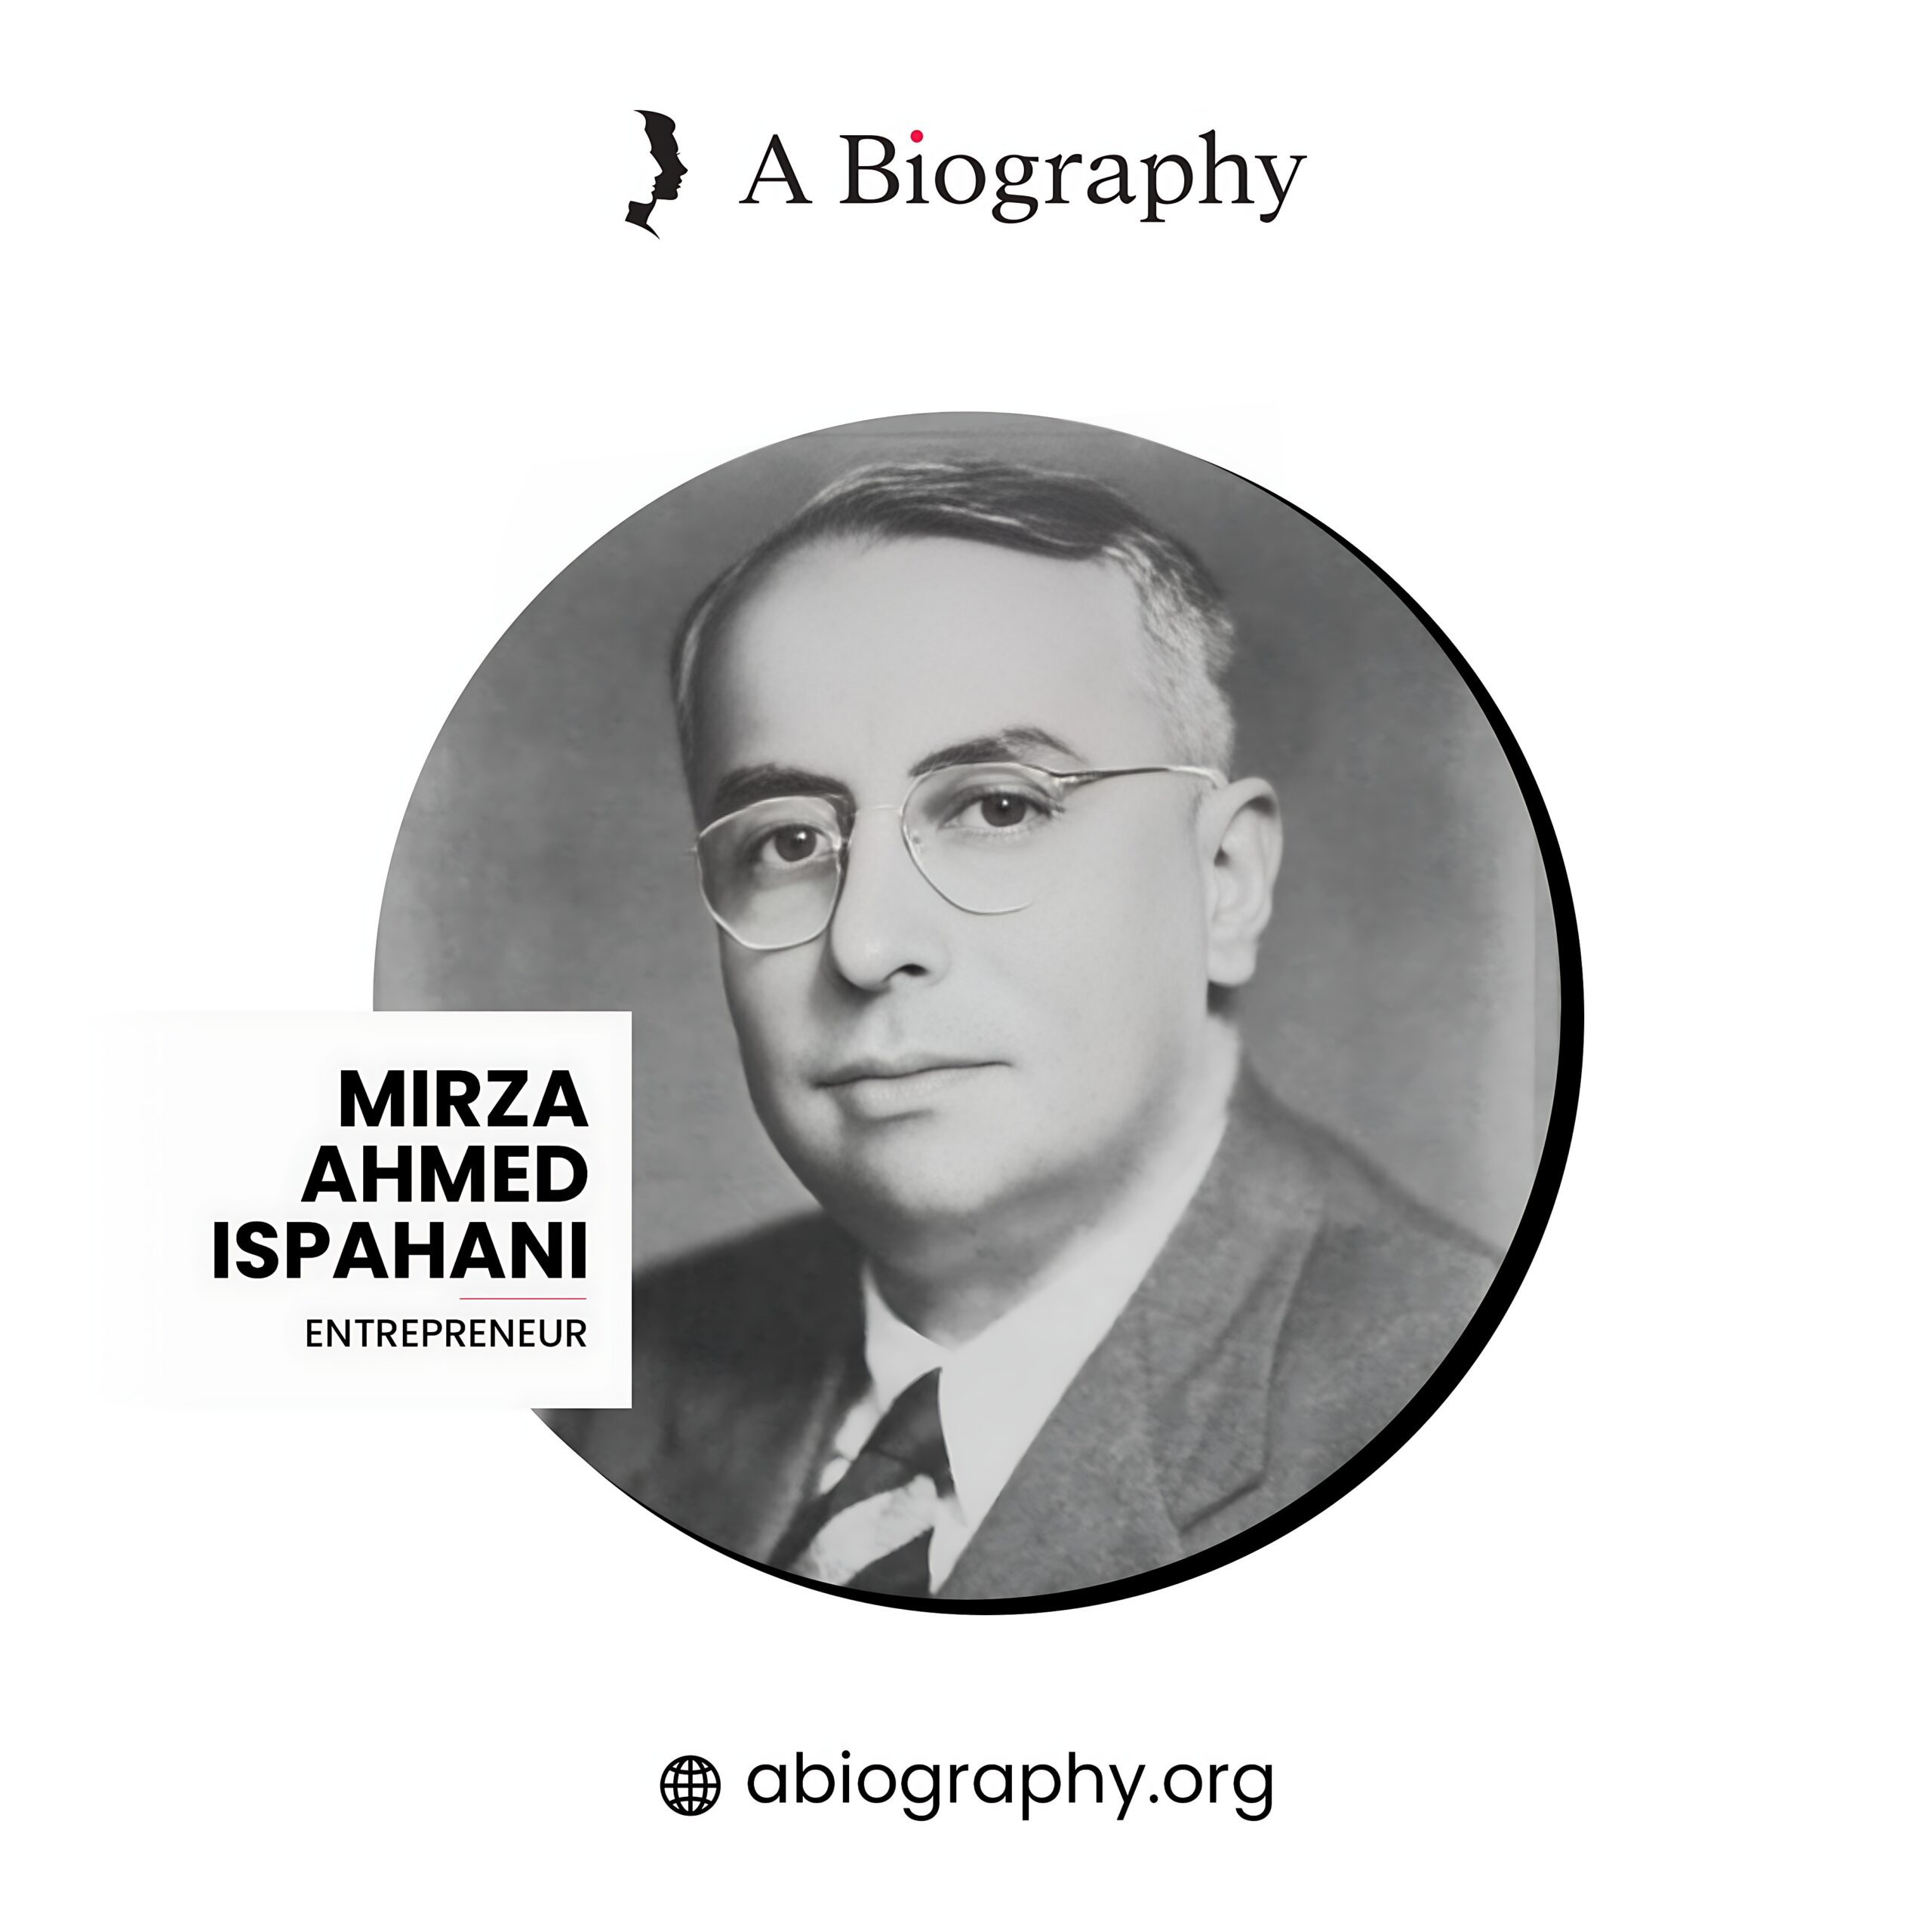 A BIOGRAPHY OF MIRZA AHMAD ISPAHANI